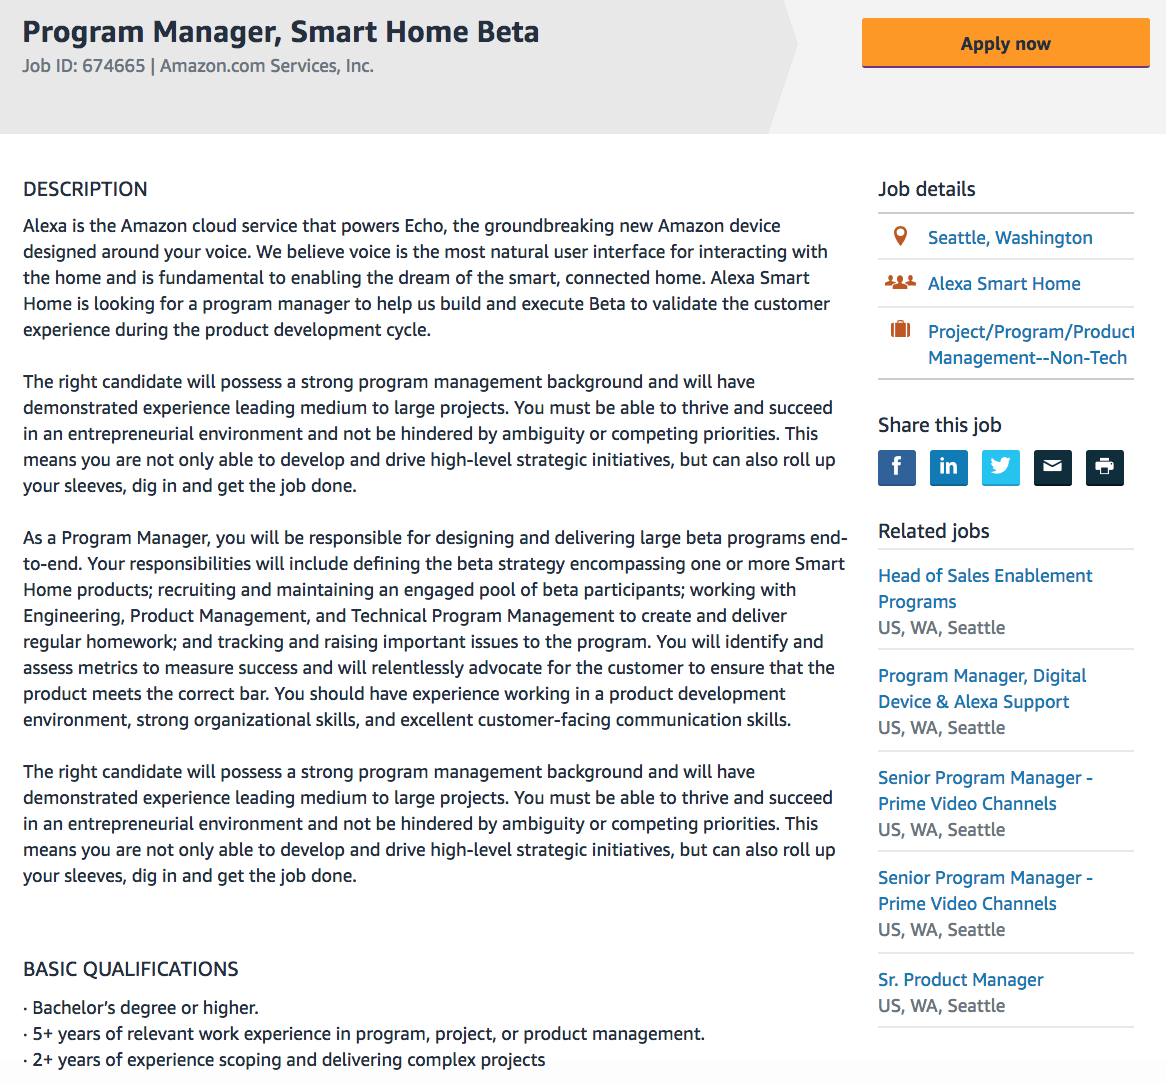 Image-of-Amazon-Job-Posting-For-Program-Manager-Smart-Home-Beta